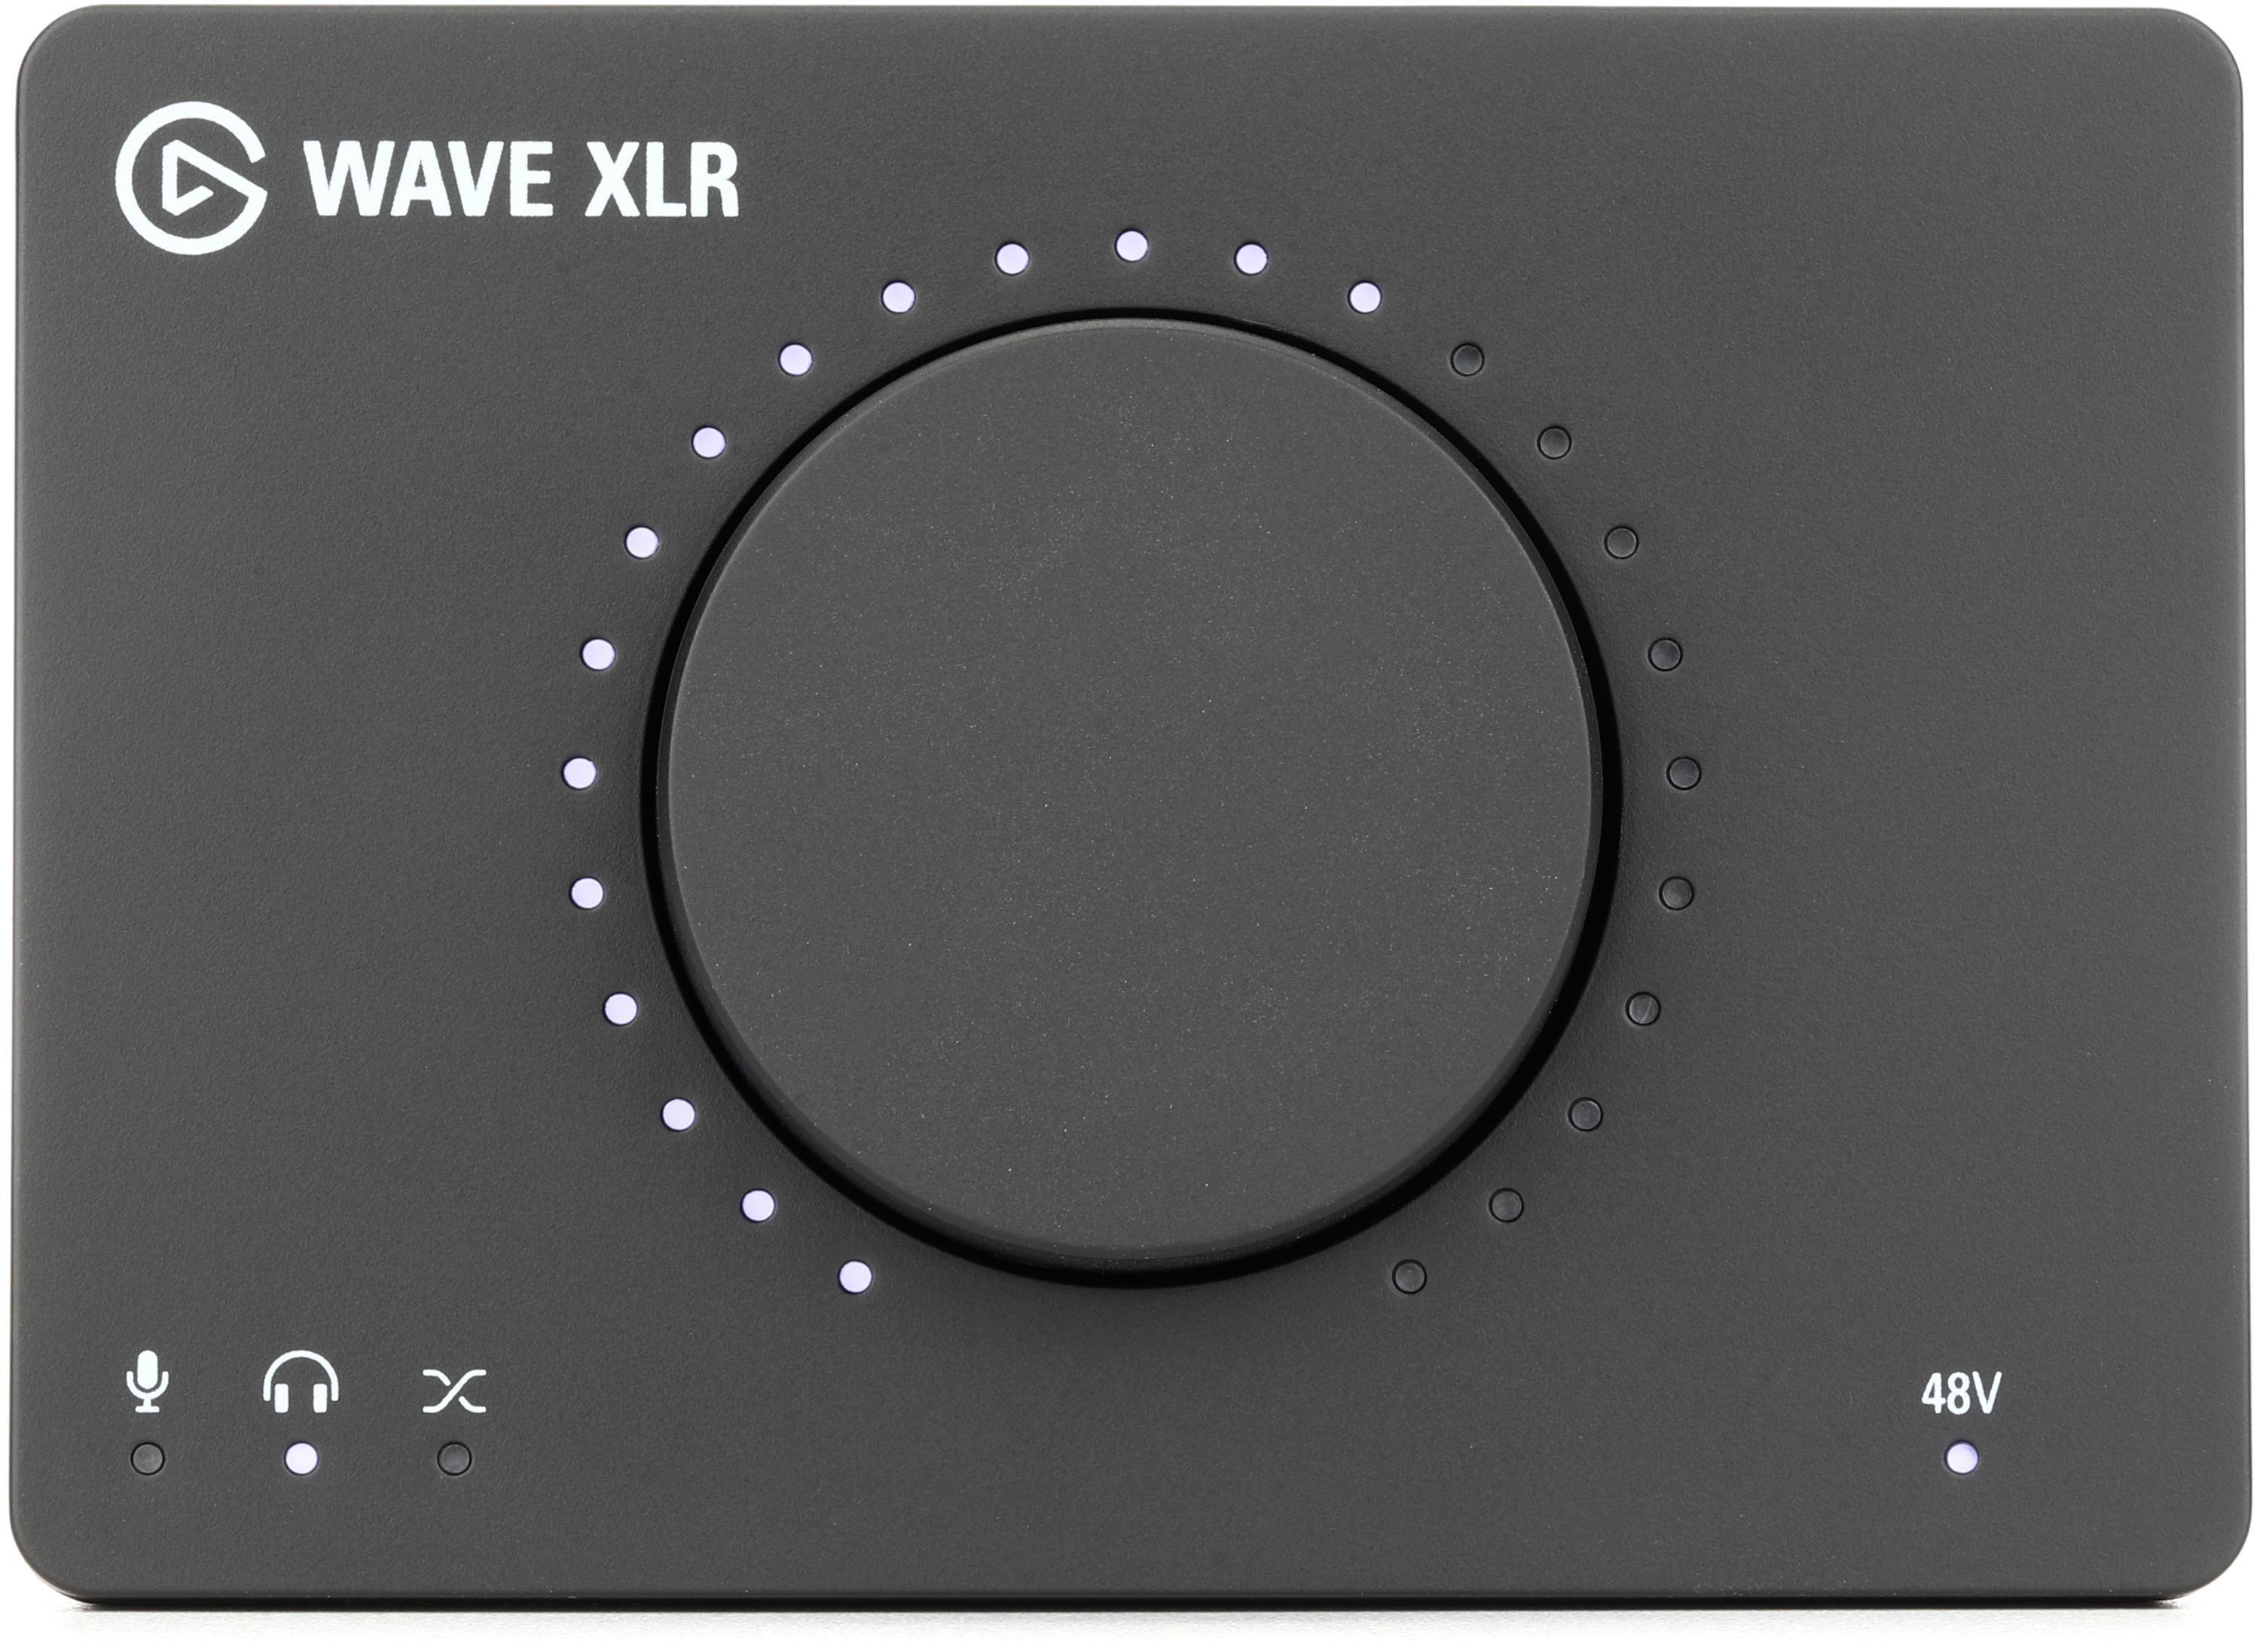 Elgato WaveXLR Microphone USB Interface | Sweetwater